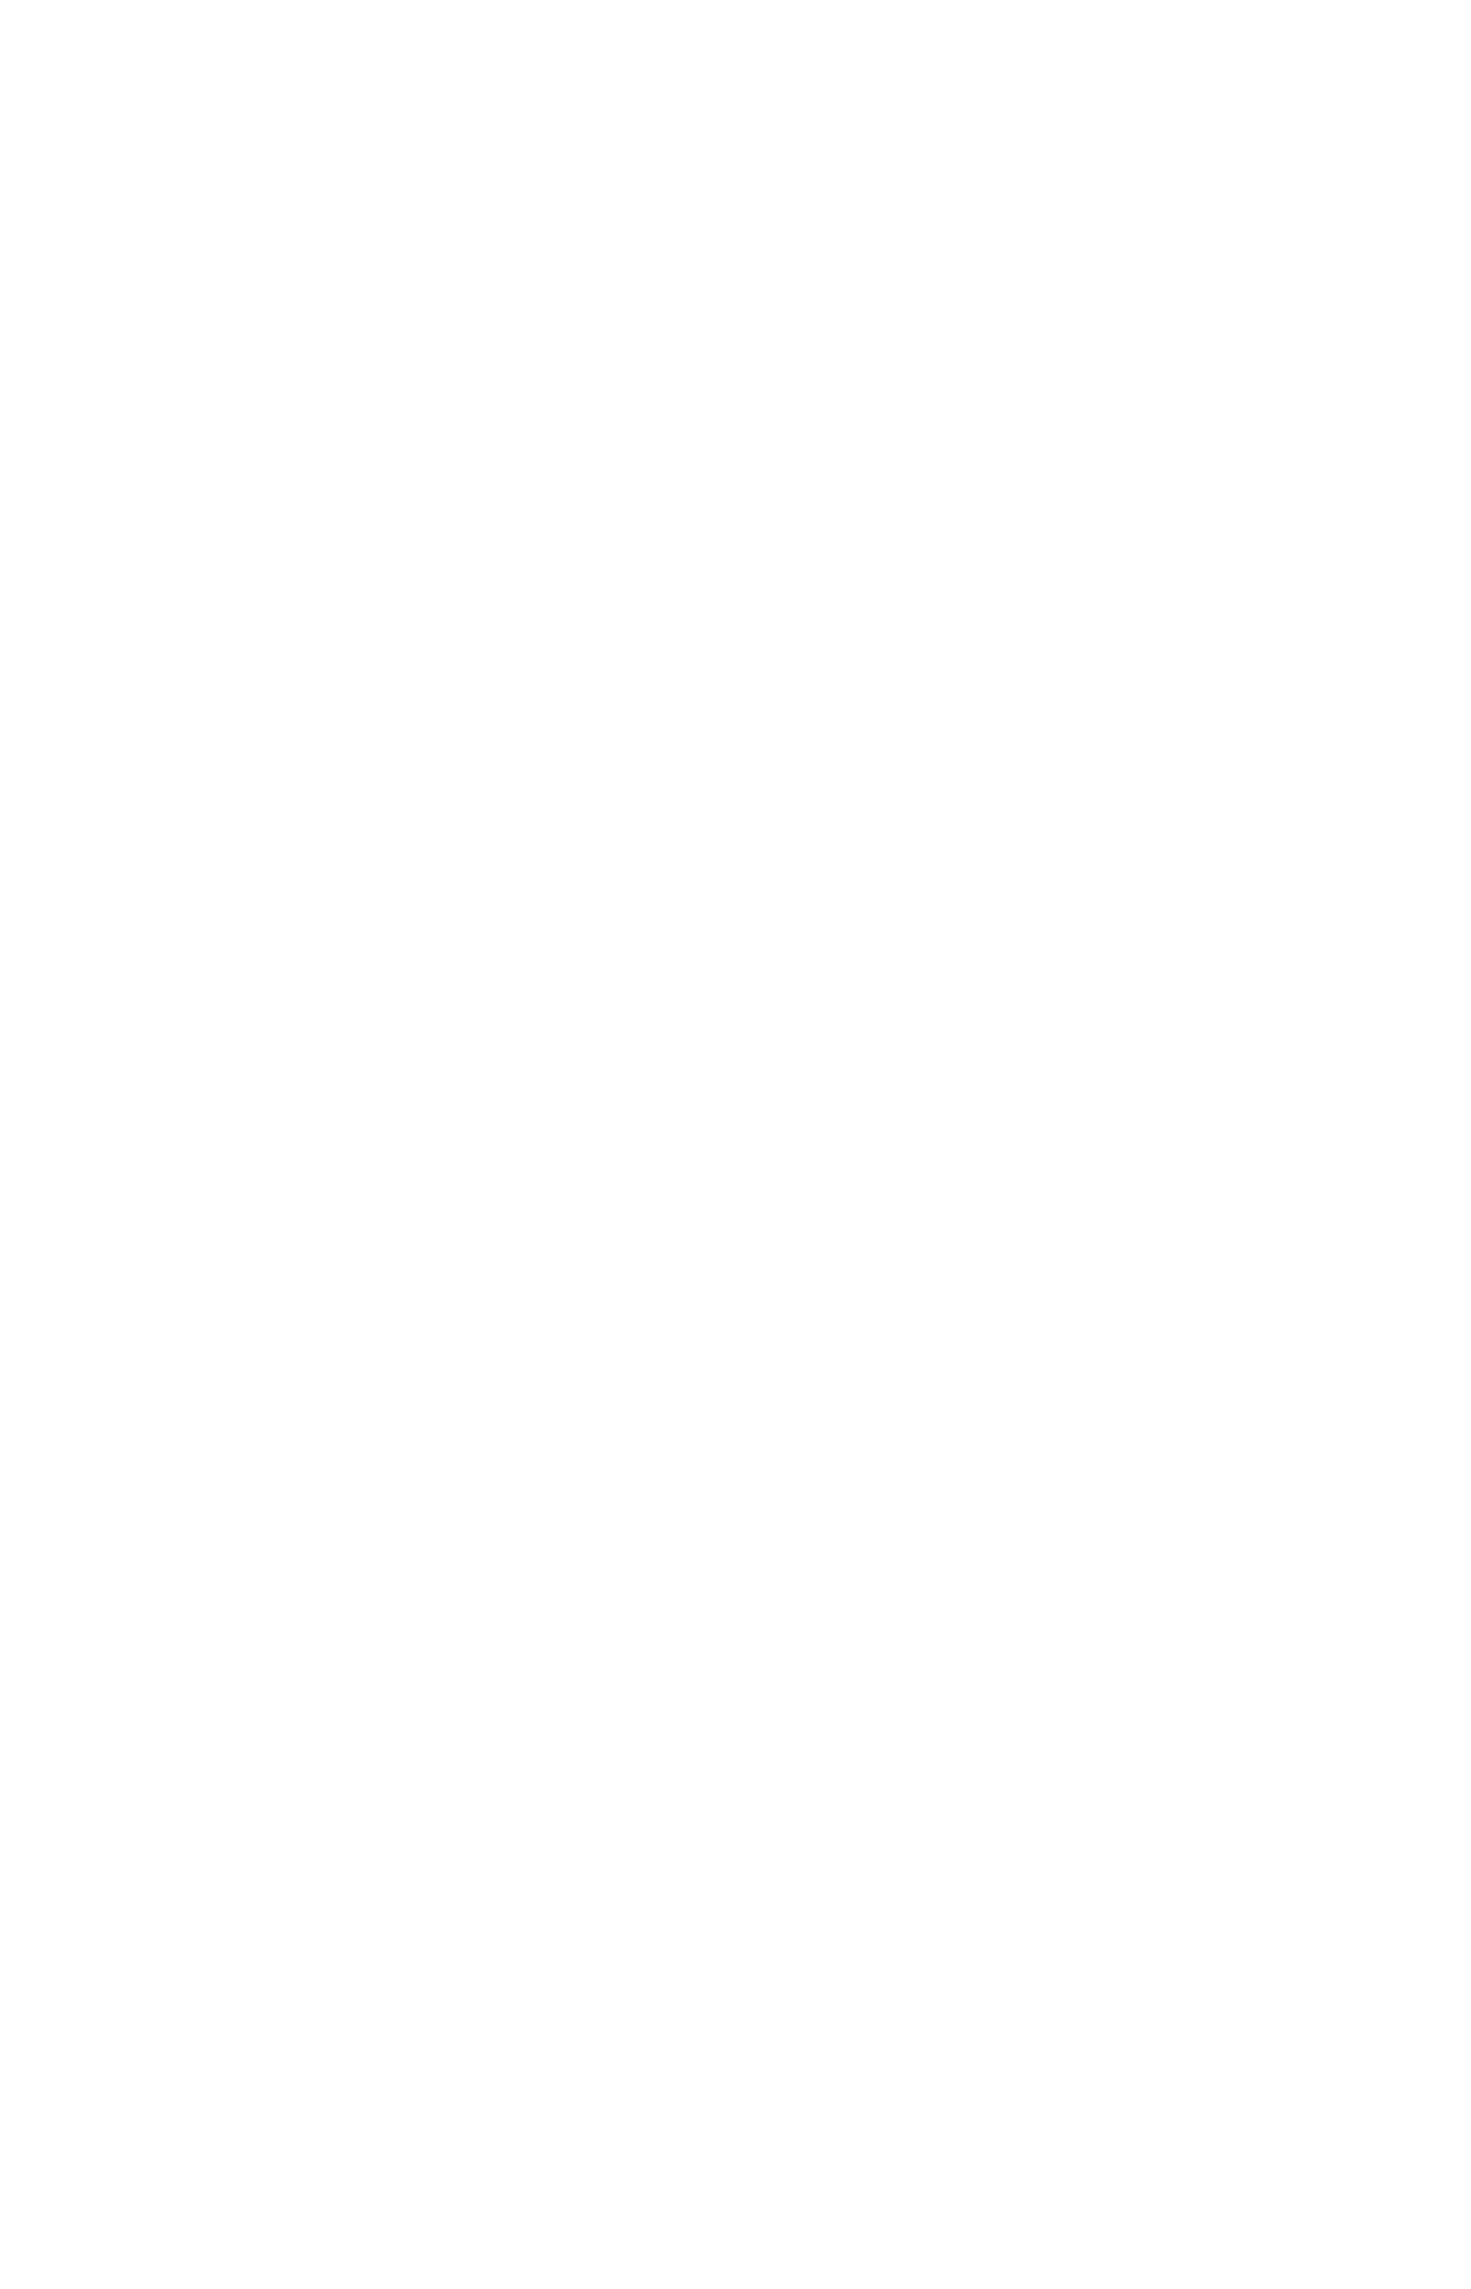 Desi Gud Factory